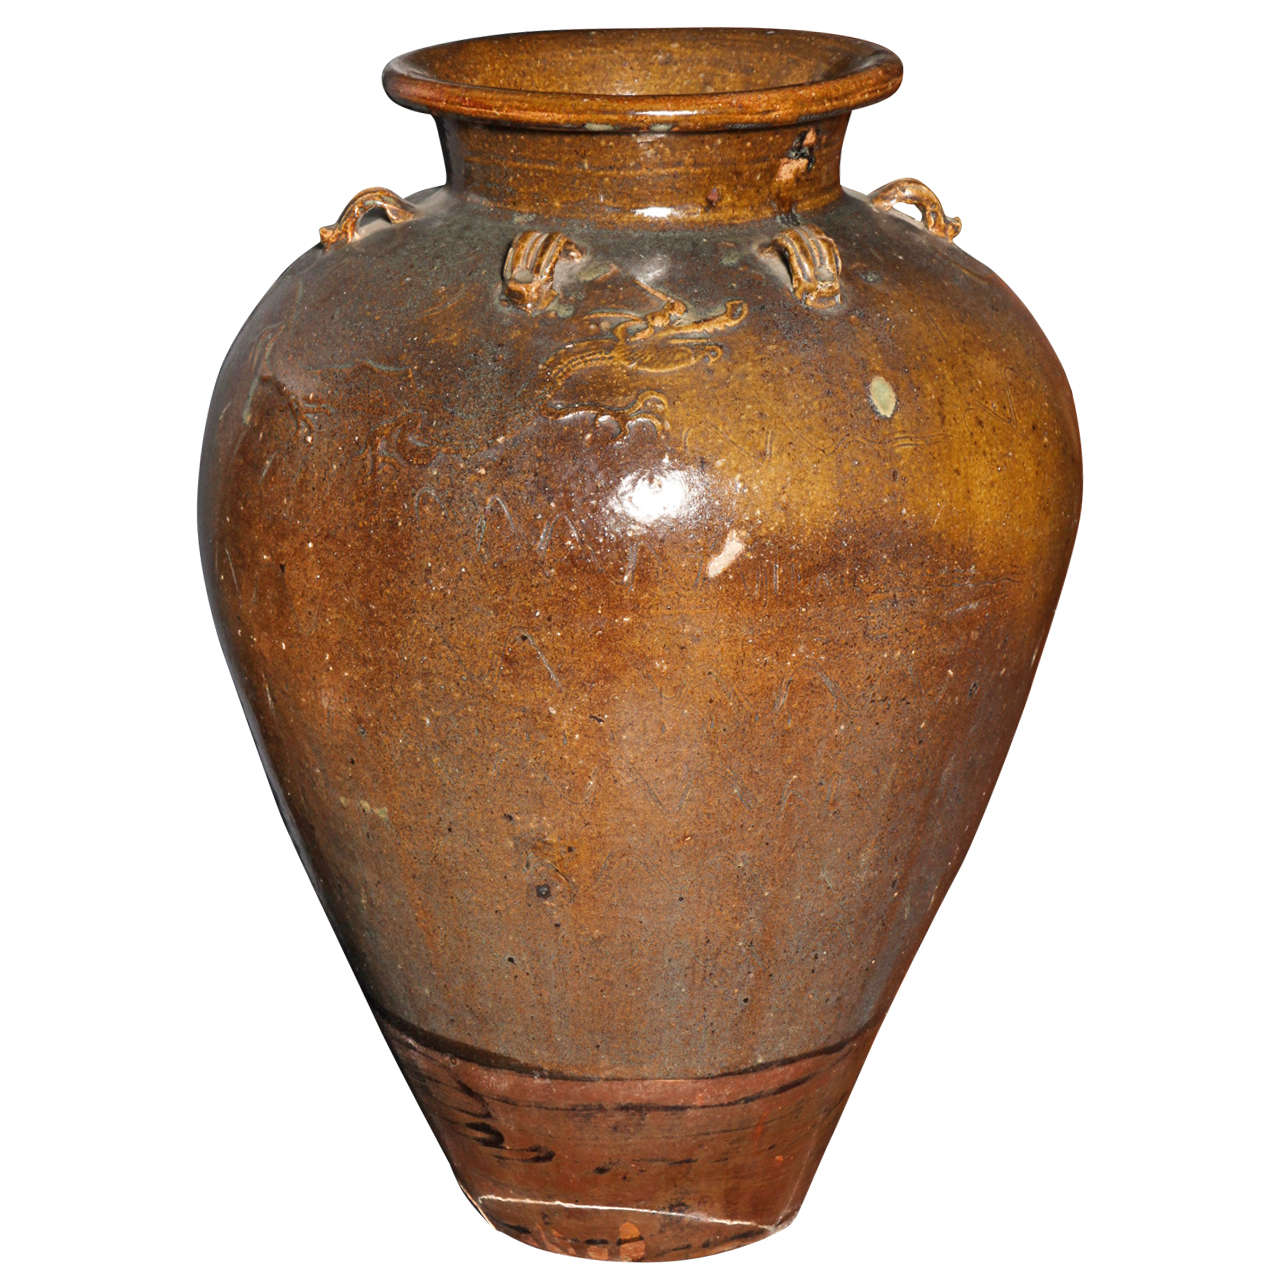 Yuan Dynasty Martaban Jar with Ochre Glaze from China, 12th-13th Century